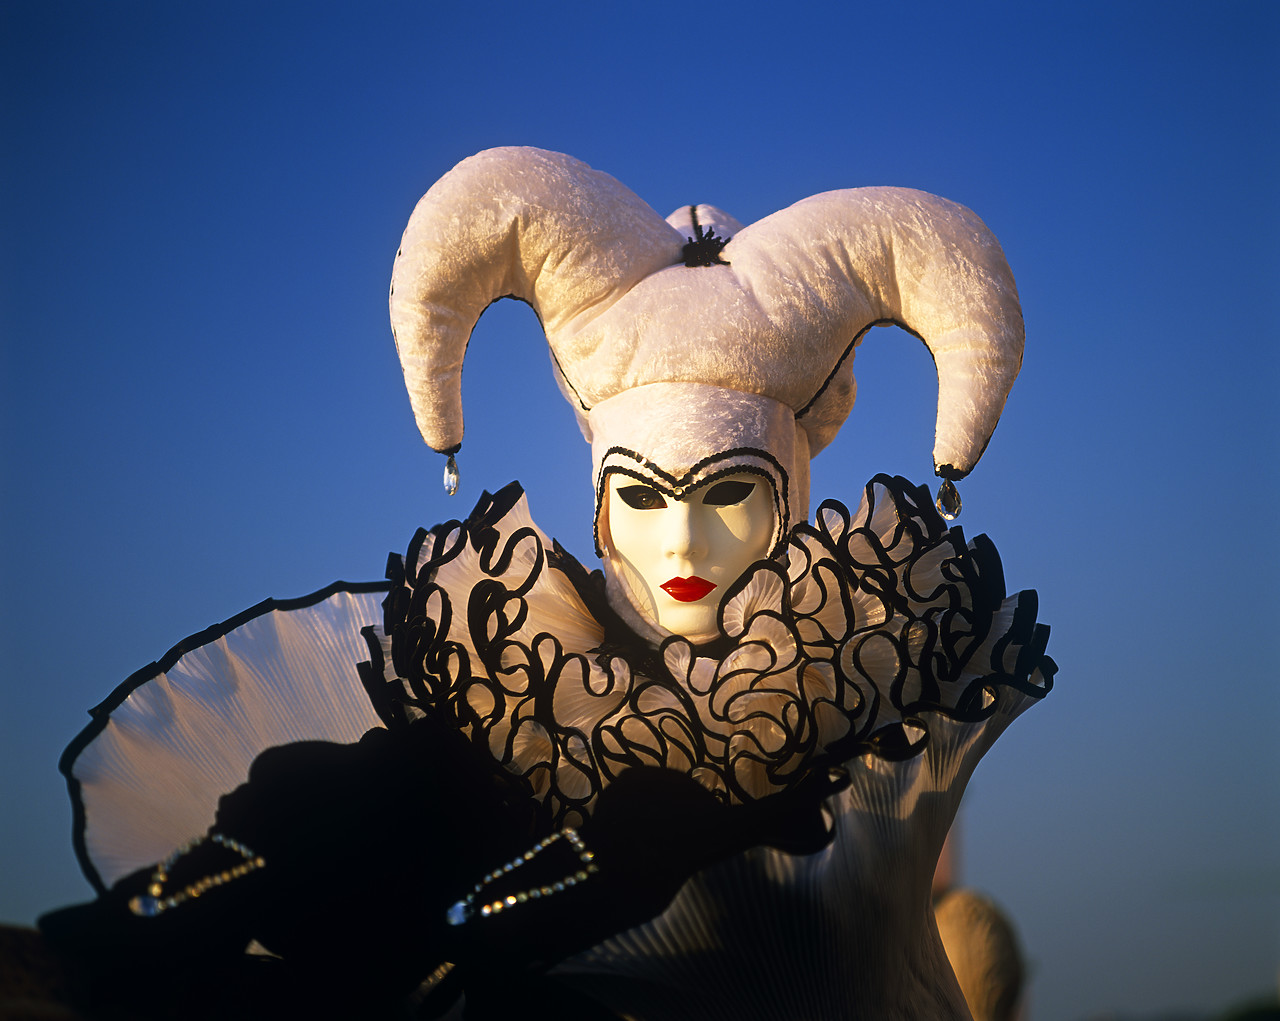 #010140-1 - Venice Carnivale Mask, Venice, Italy